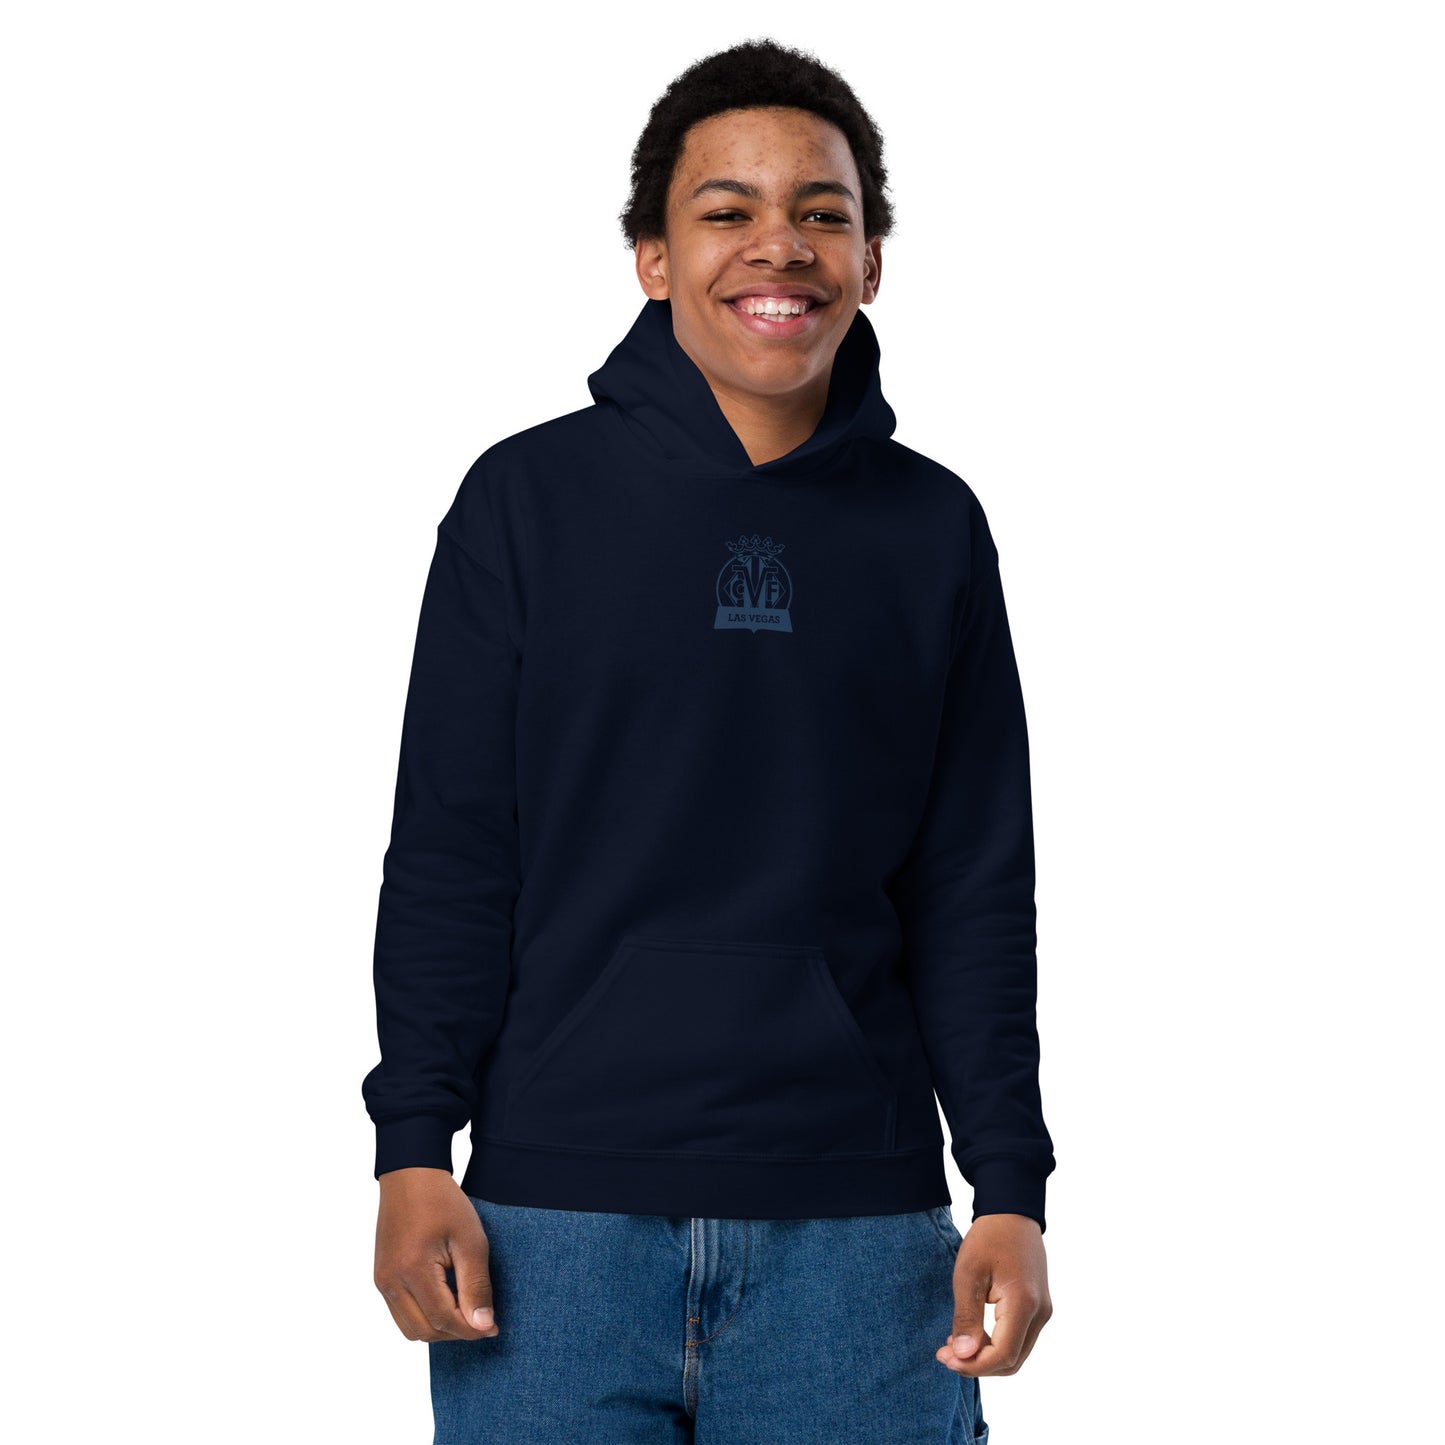 CVF LV Youth heavy blend hoodie